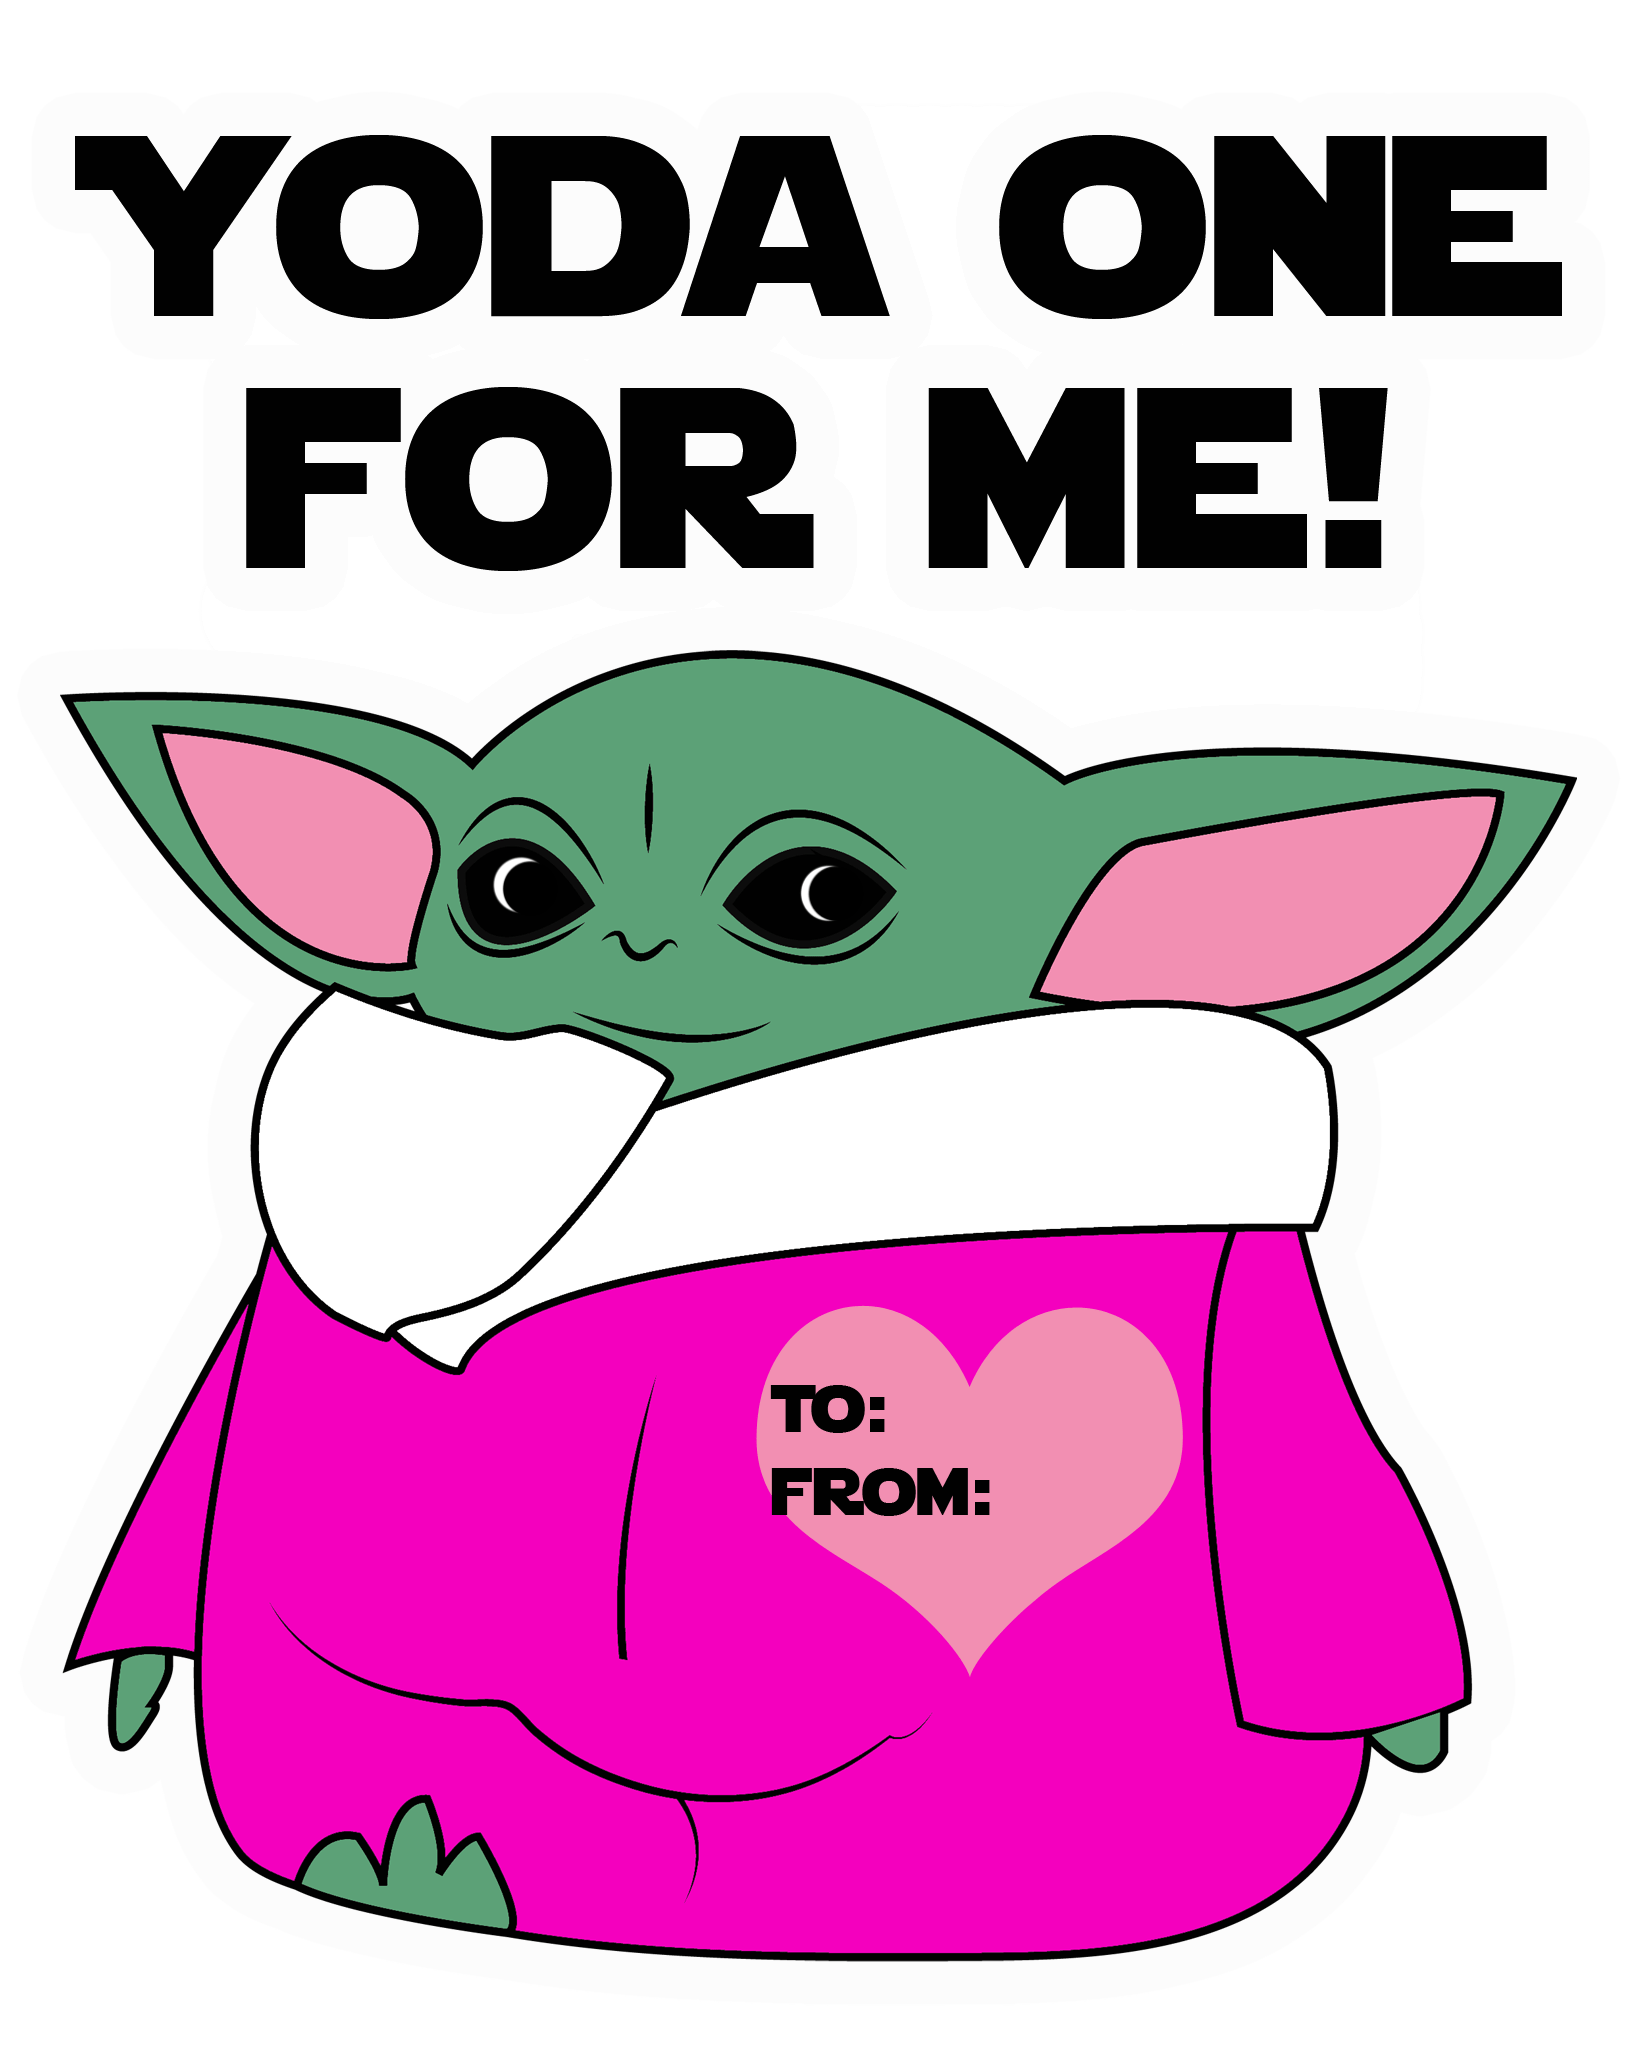 Baby Yoda Valentines Drawings